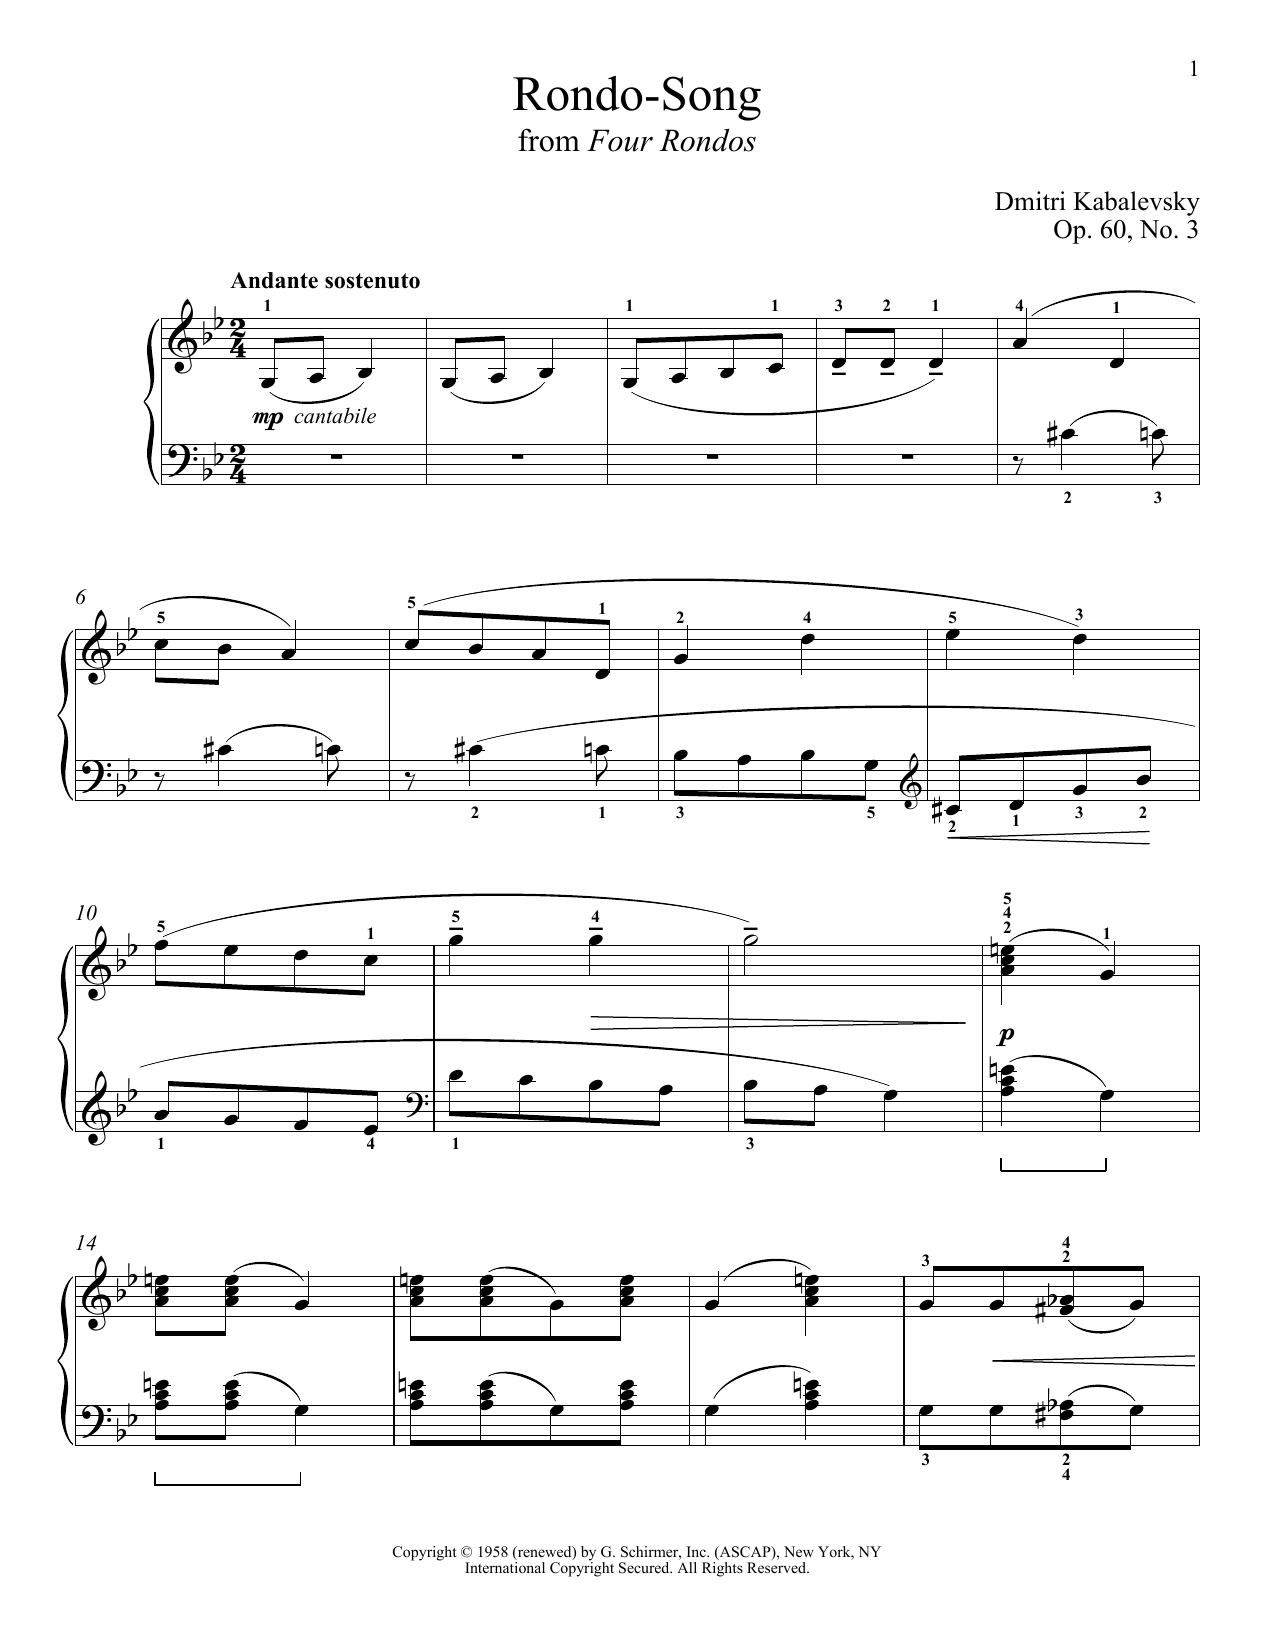 Download Dmitri Kabalevsky Rondo-Song Sheet Music